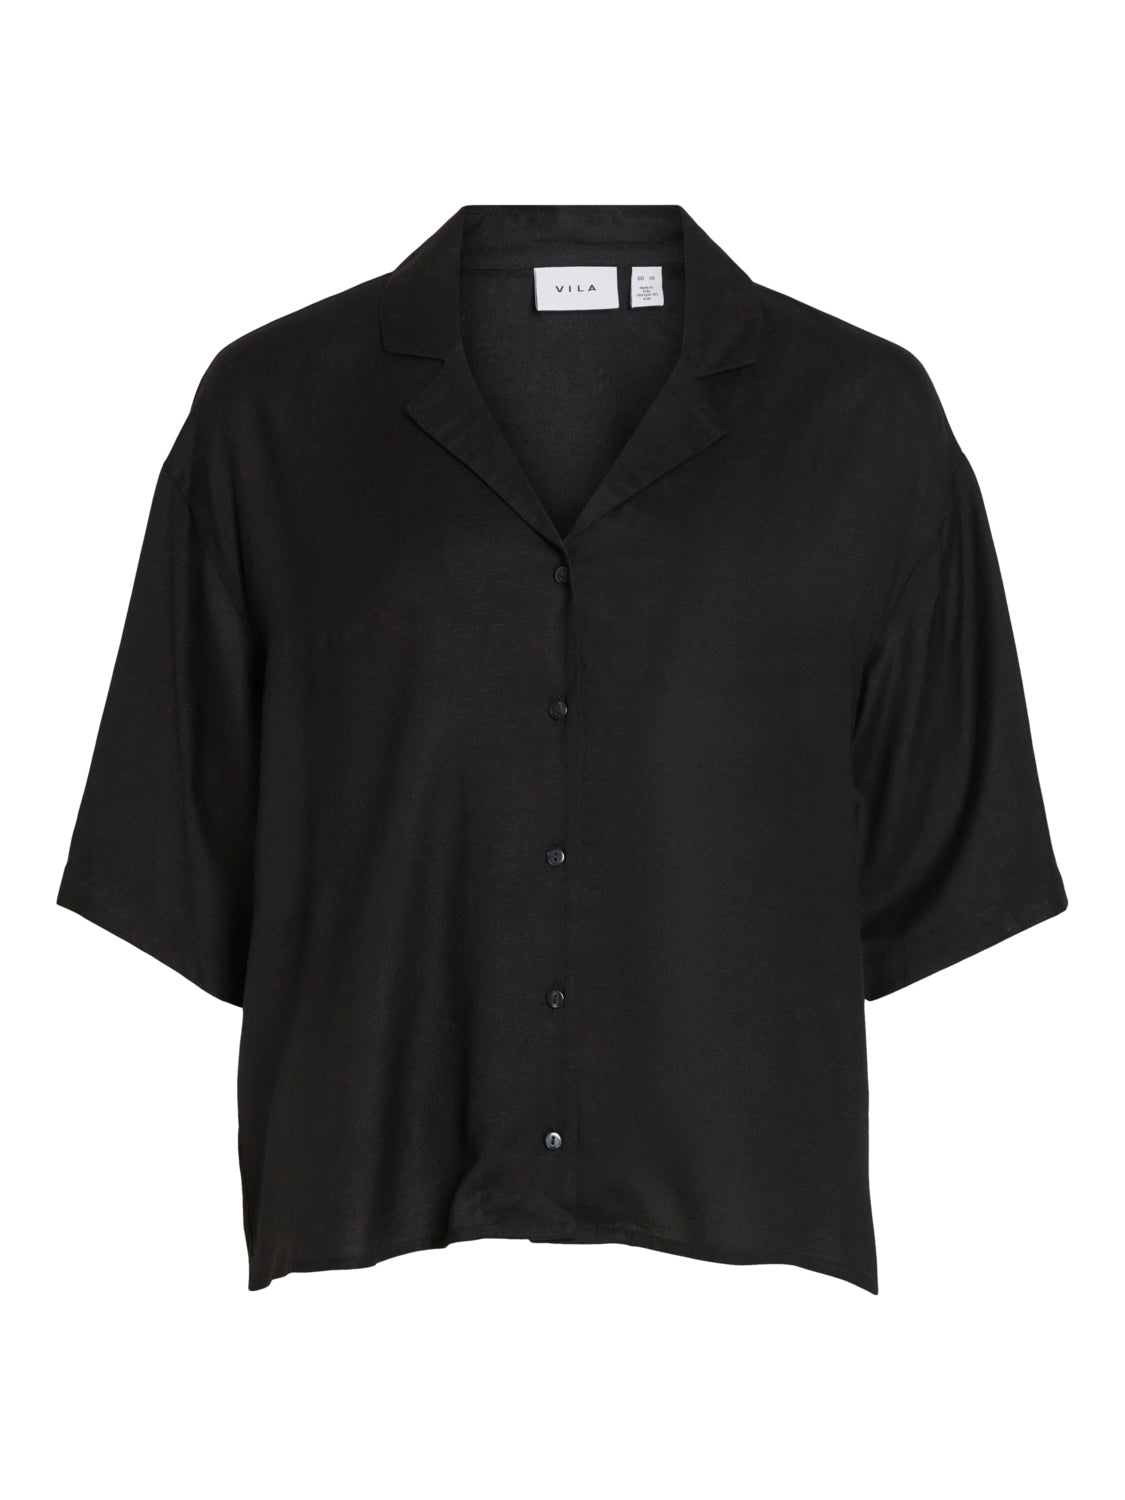 VIPRICIL T-Shirts & Tops - Black